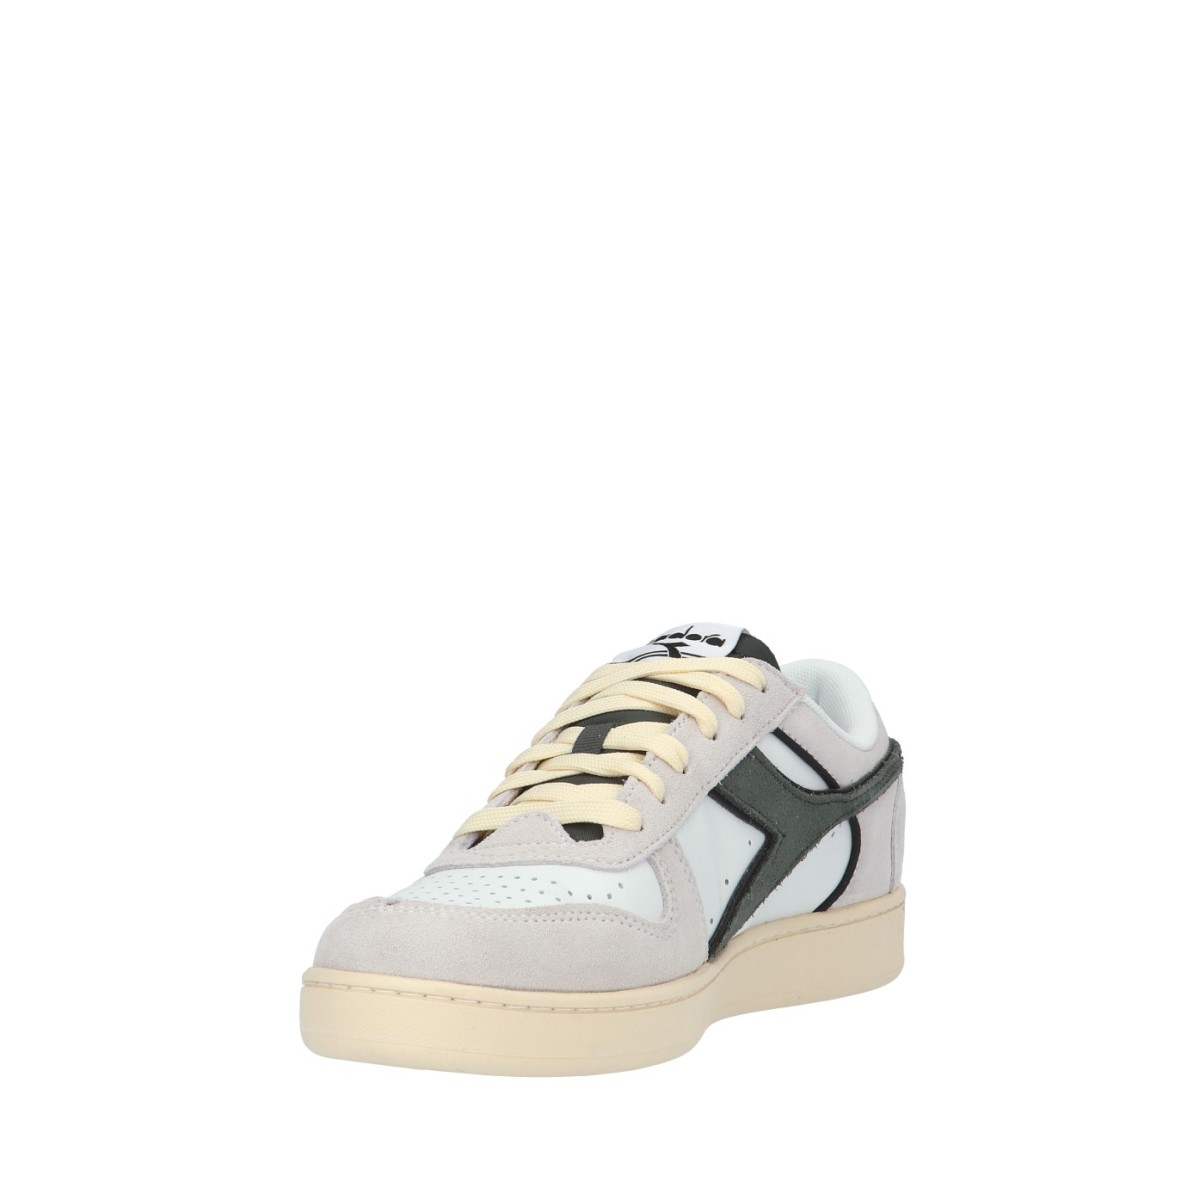 Diadora Sneaker Bianco/verde Gomma 501.178565